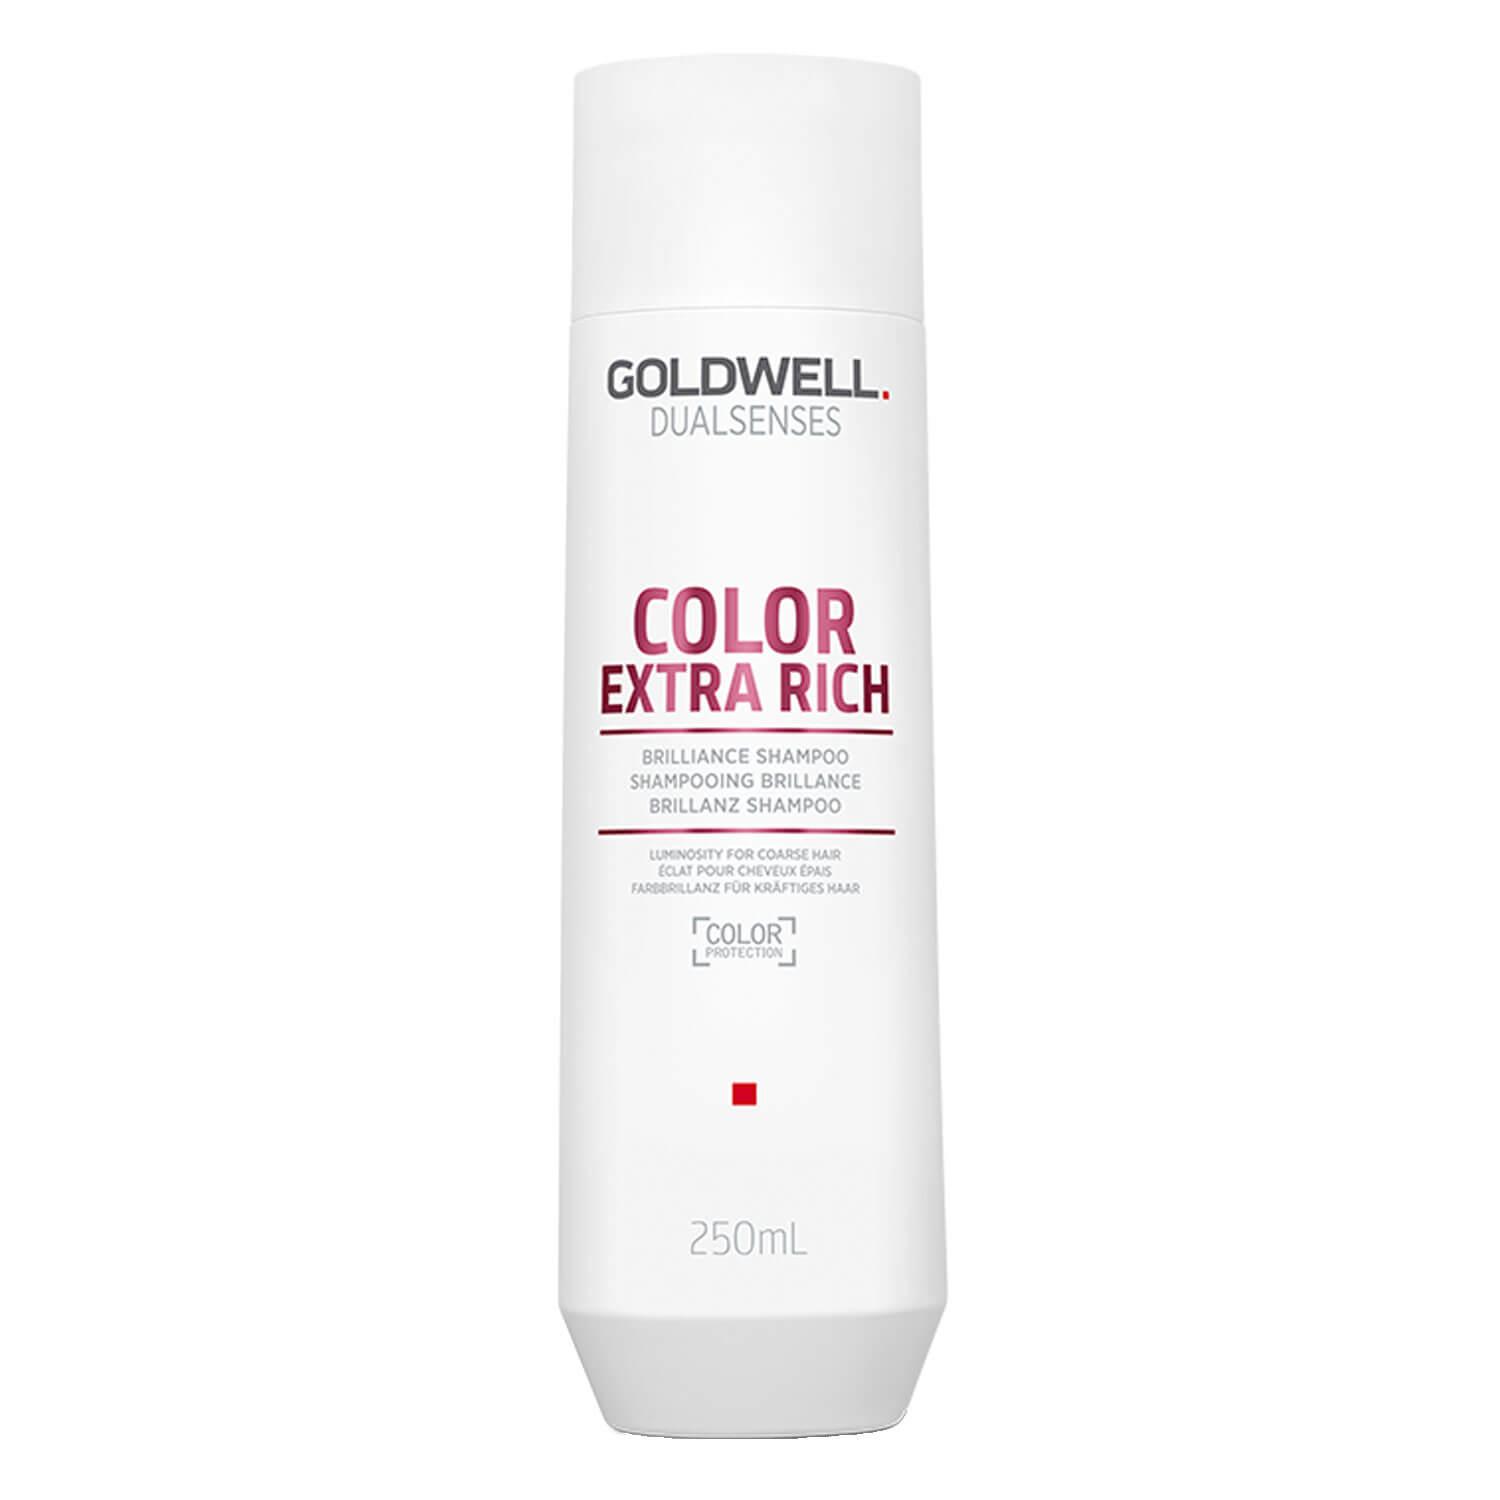 Dualsenses Color Extra Rich - Brilliance Shampoo